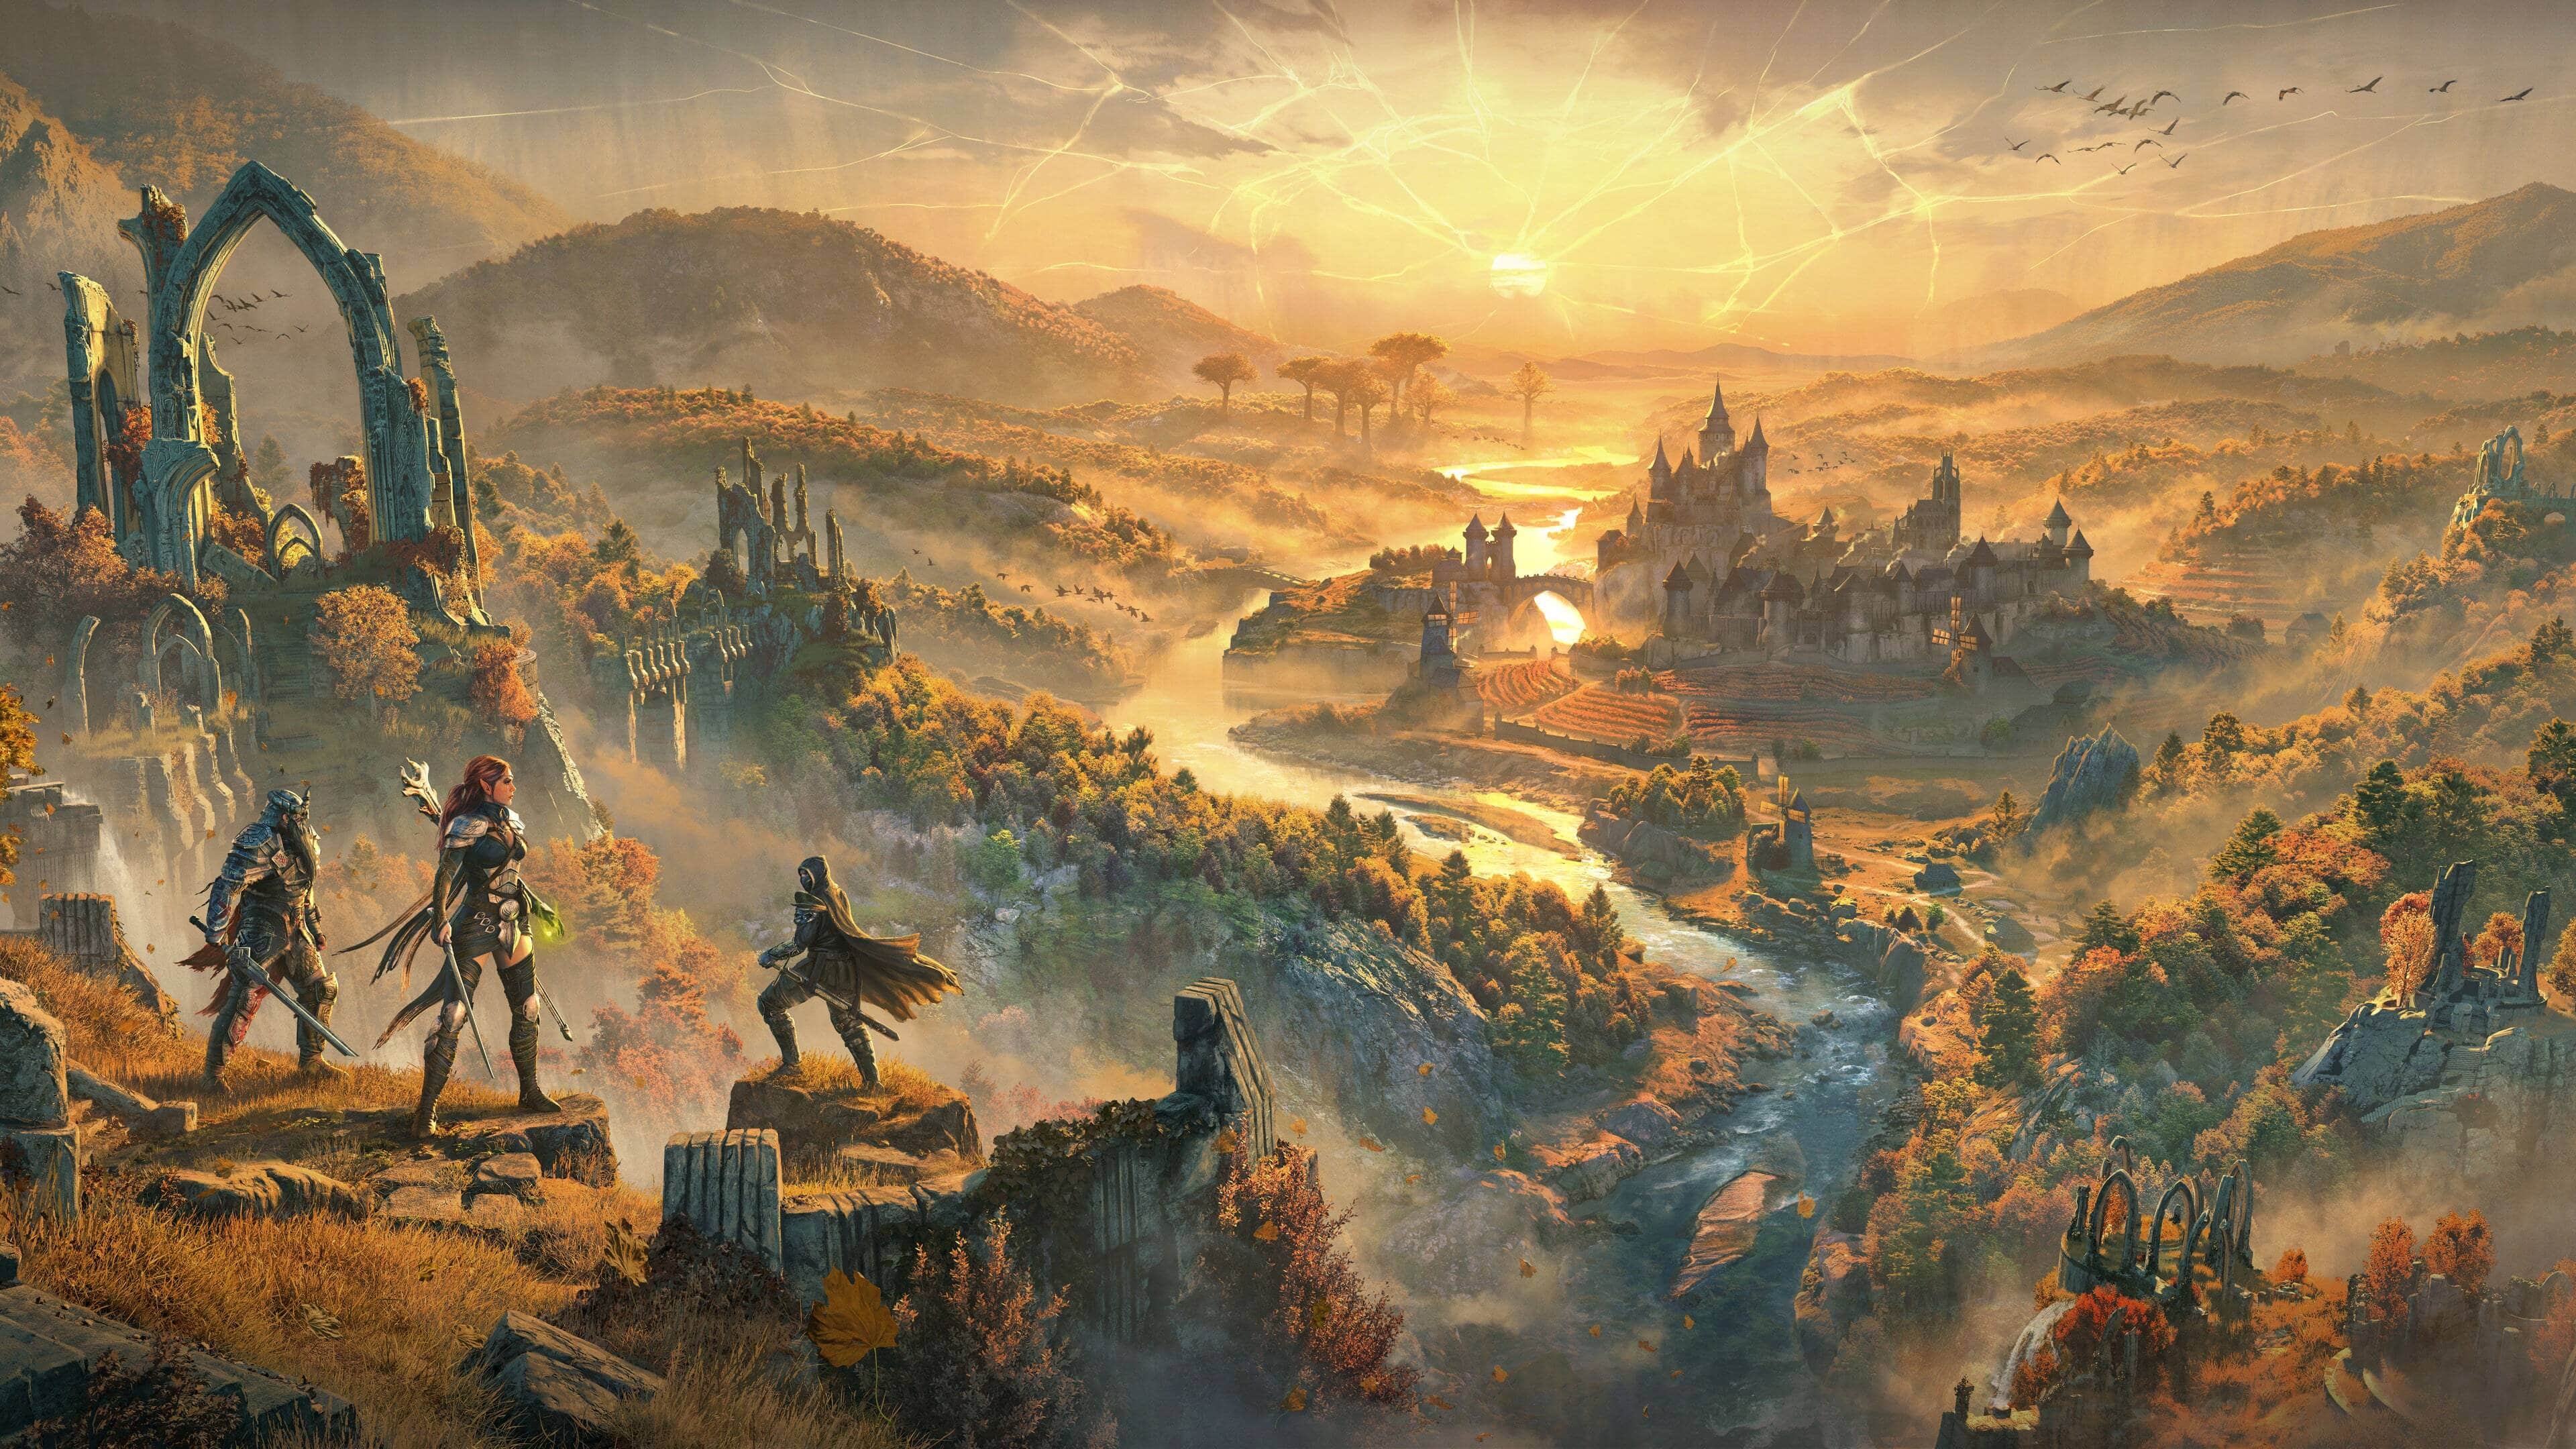  The Elder Scrolls V: Skyrim - PC : Everything Else